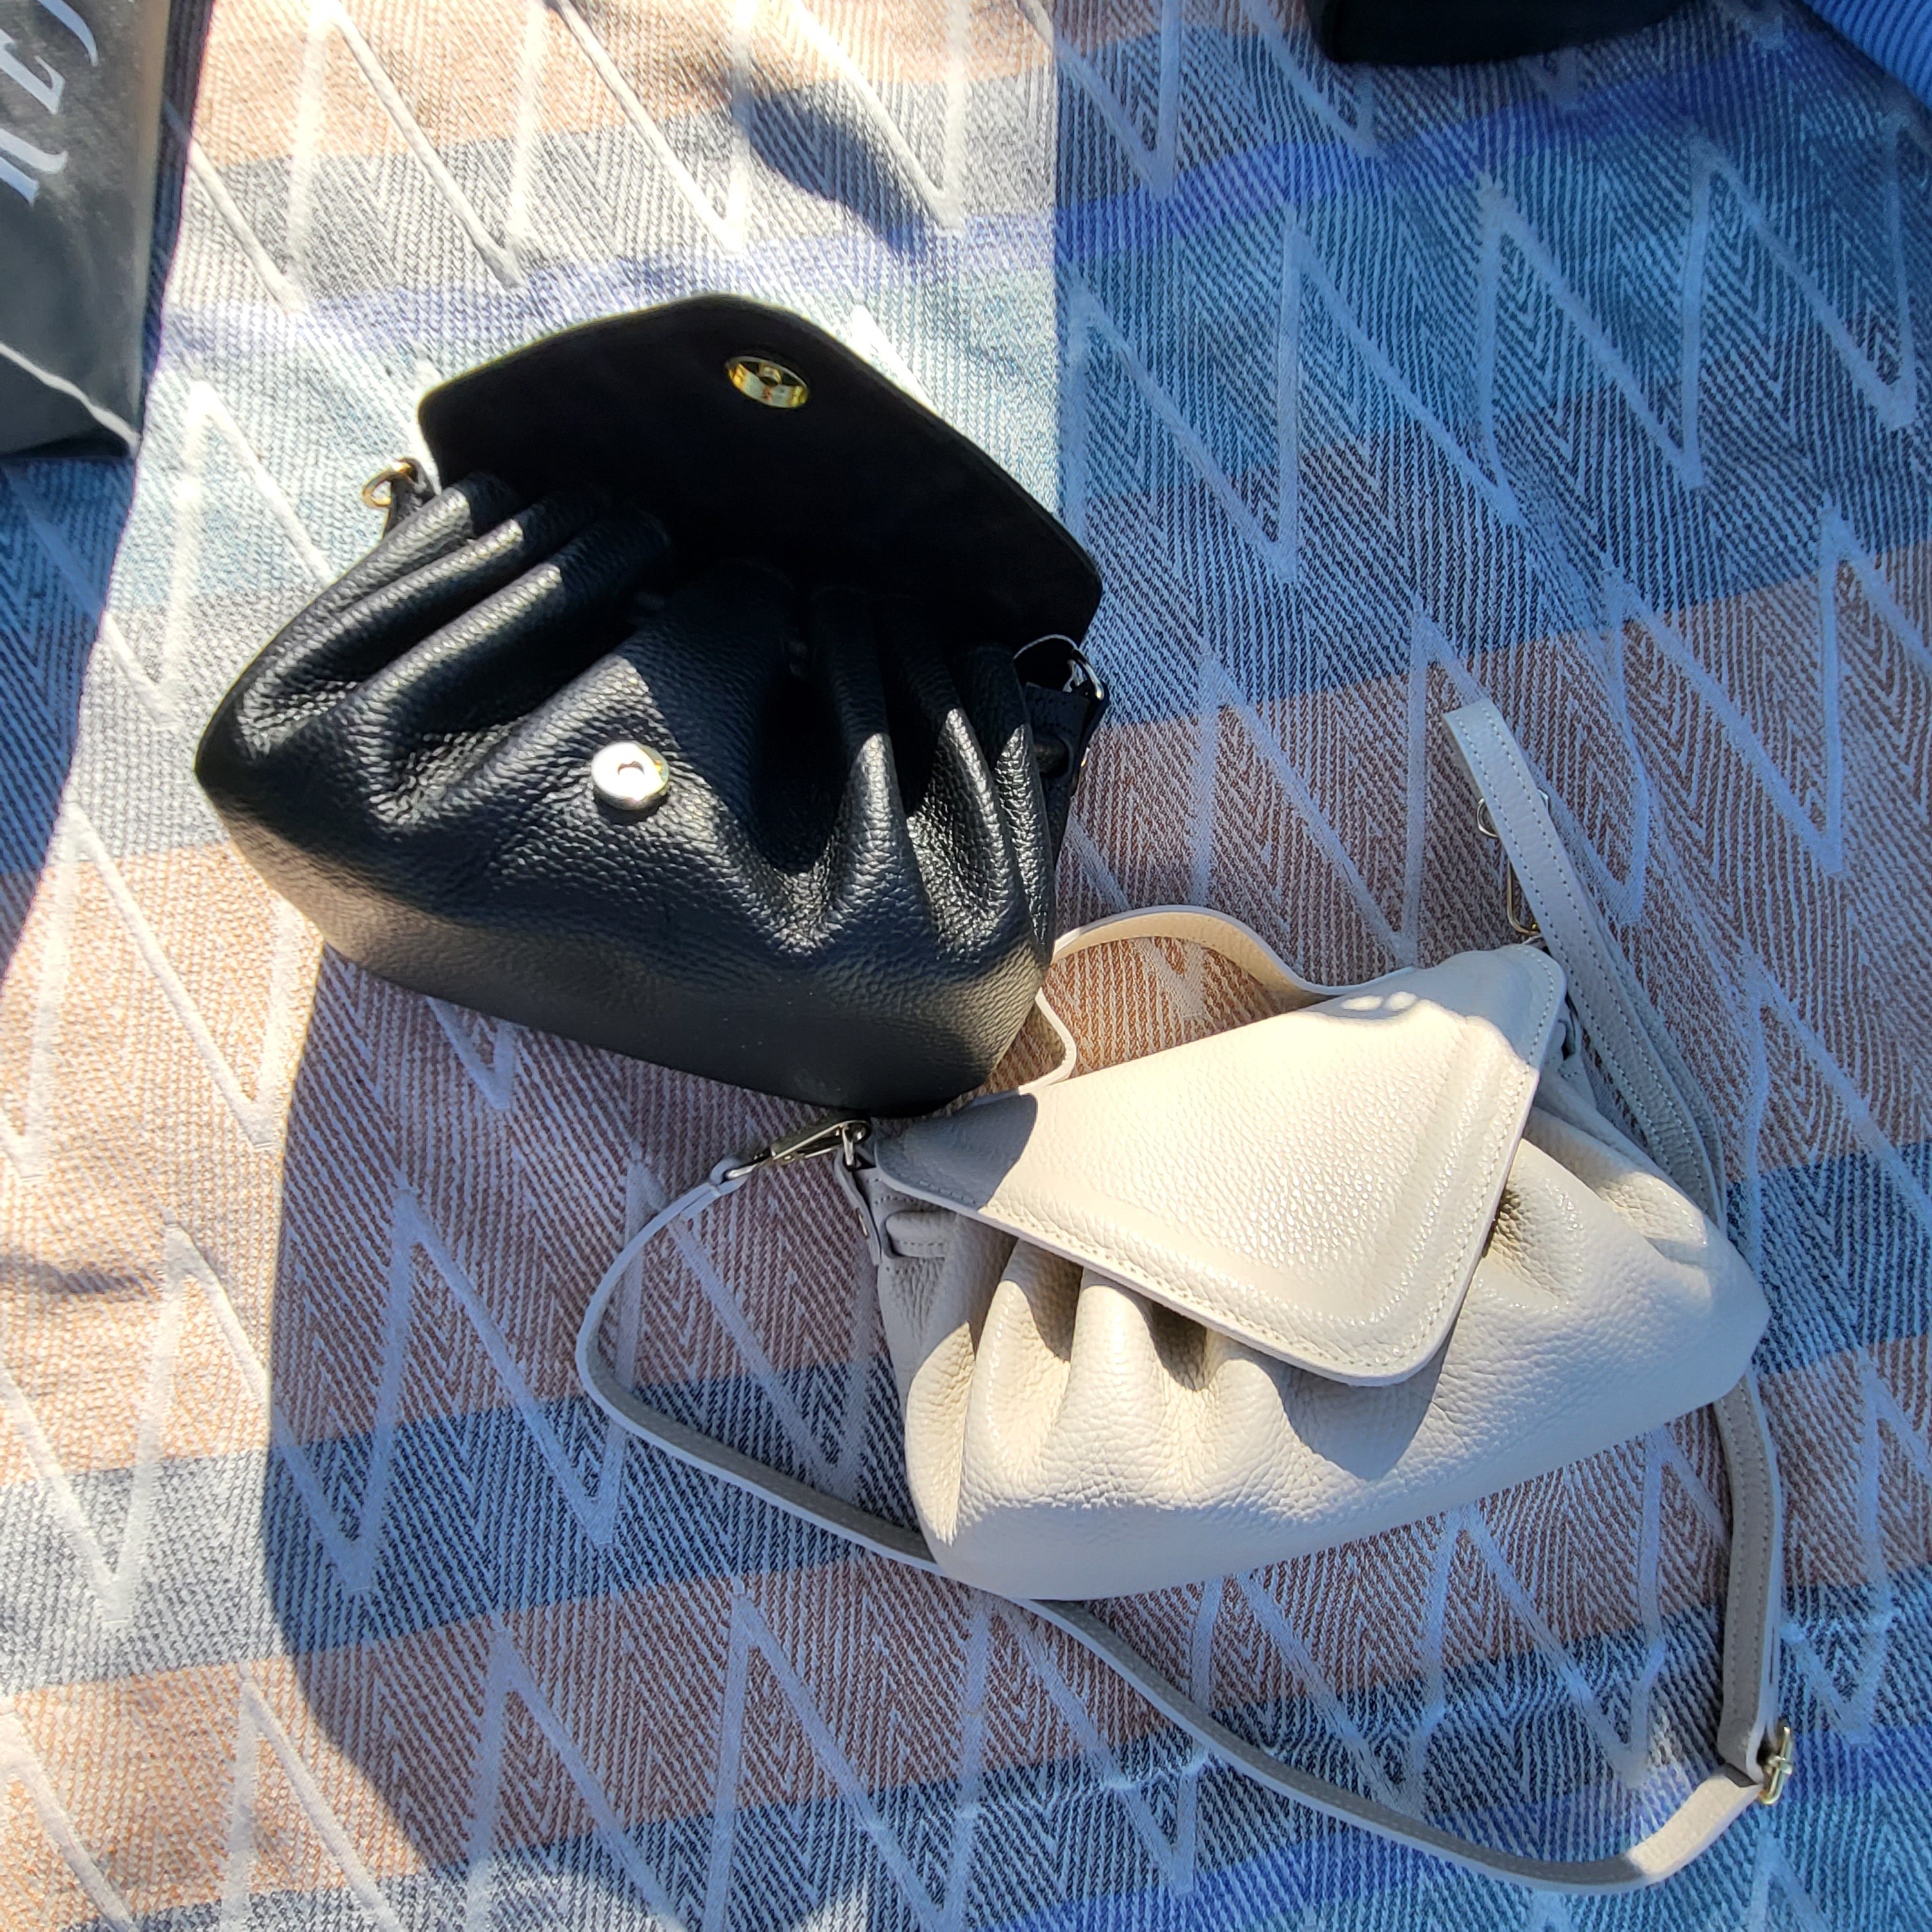 Carro Positano Genuine Italian leather shirring tote bag